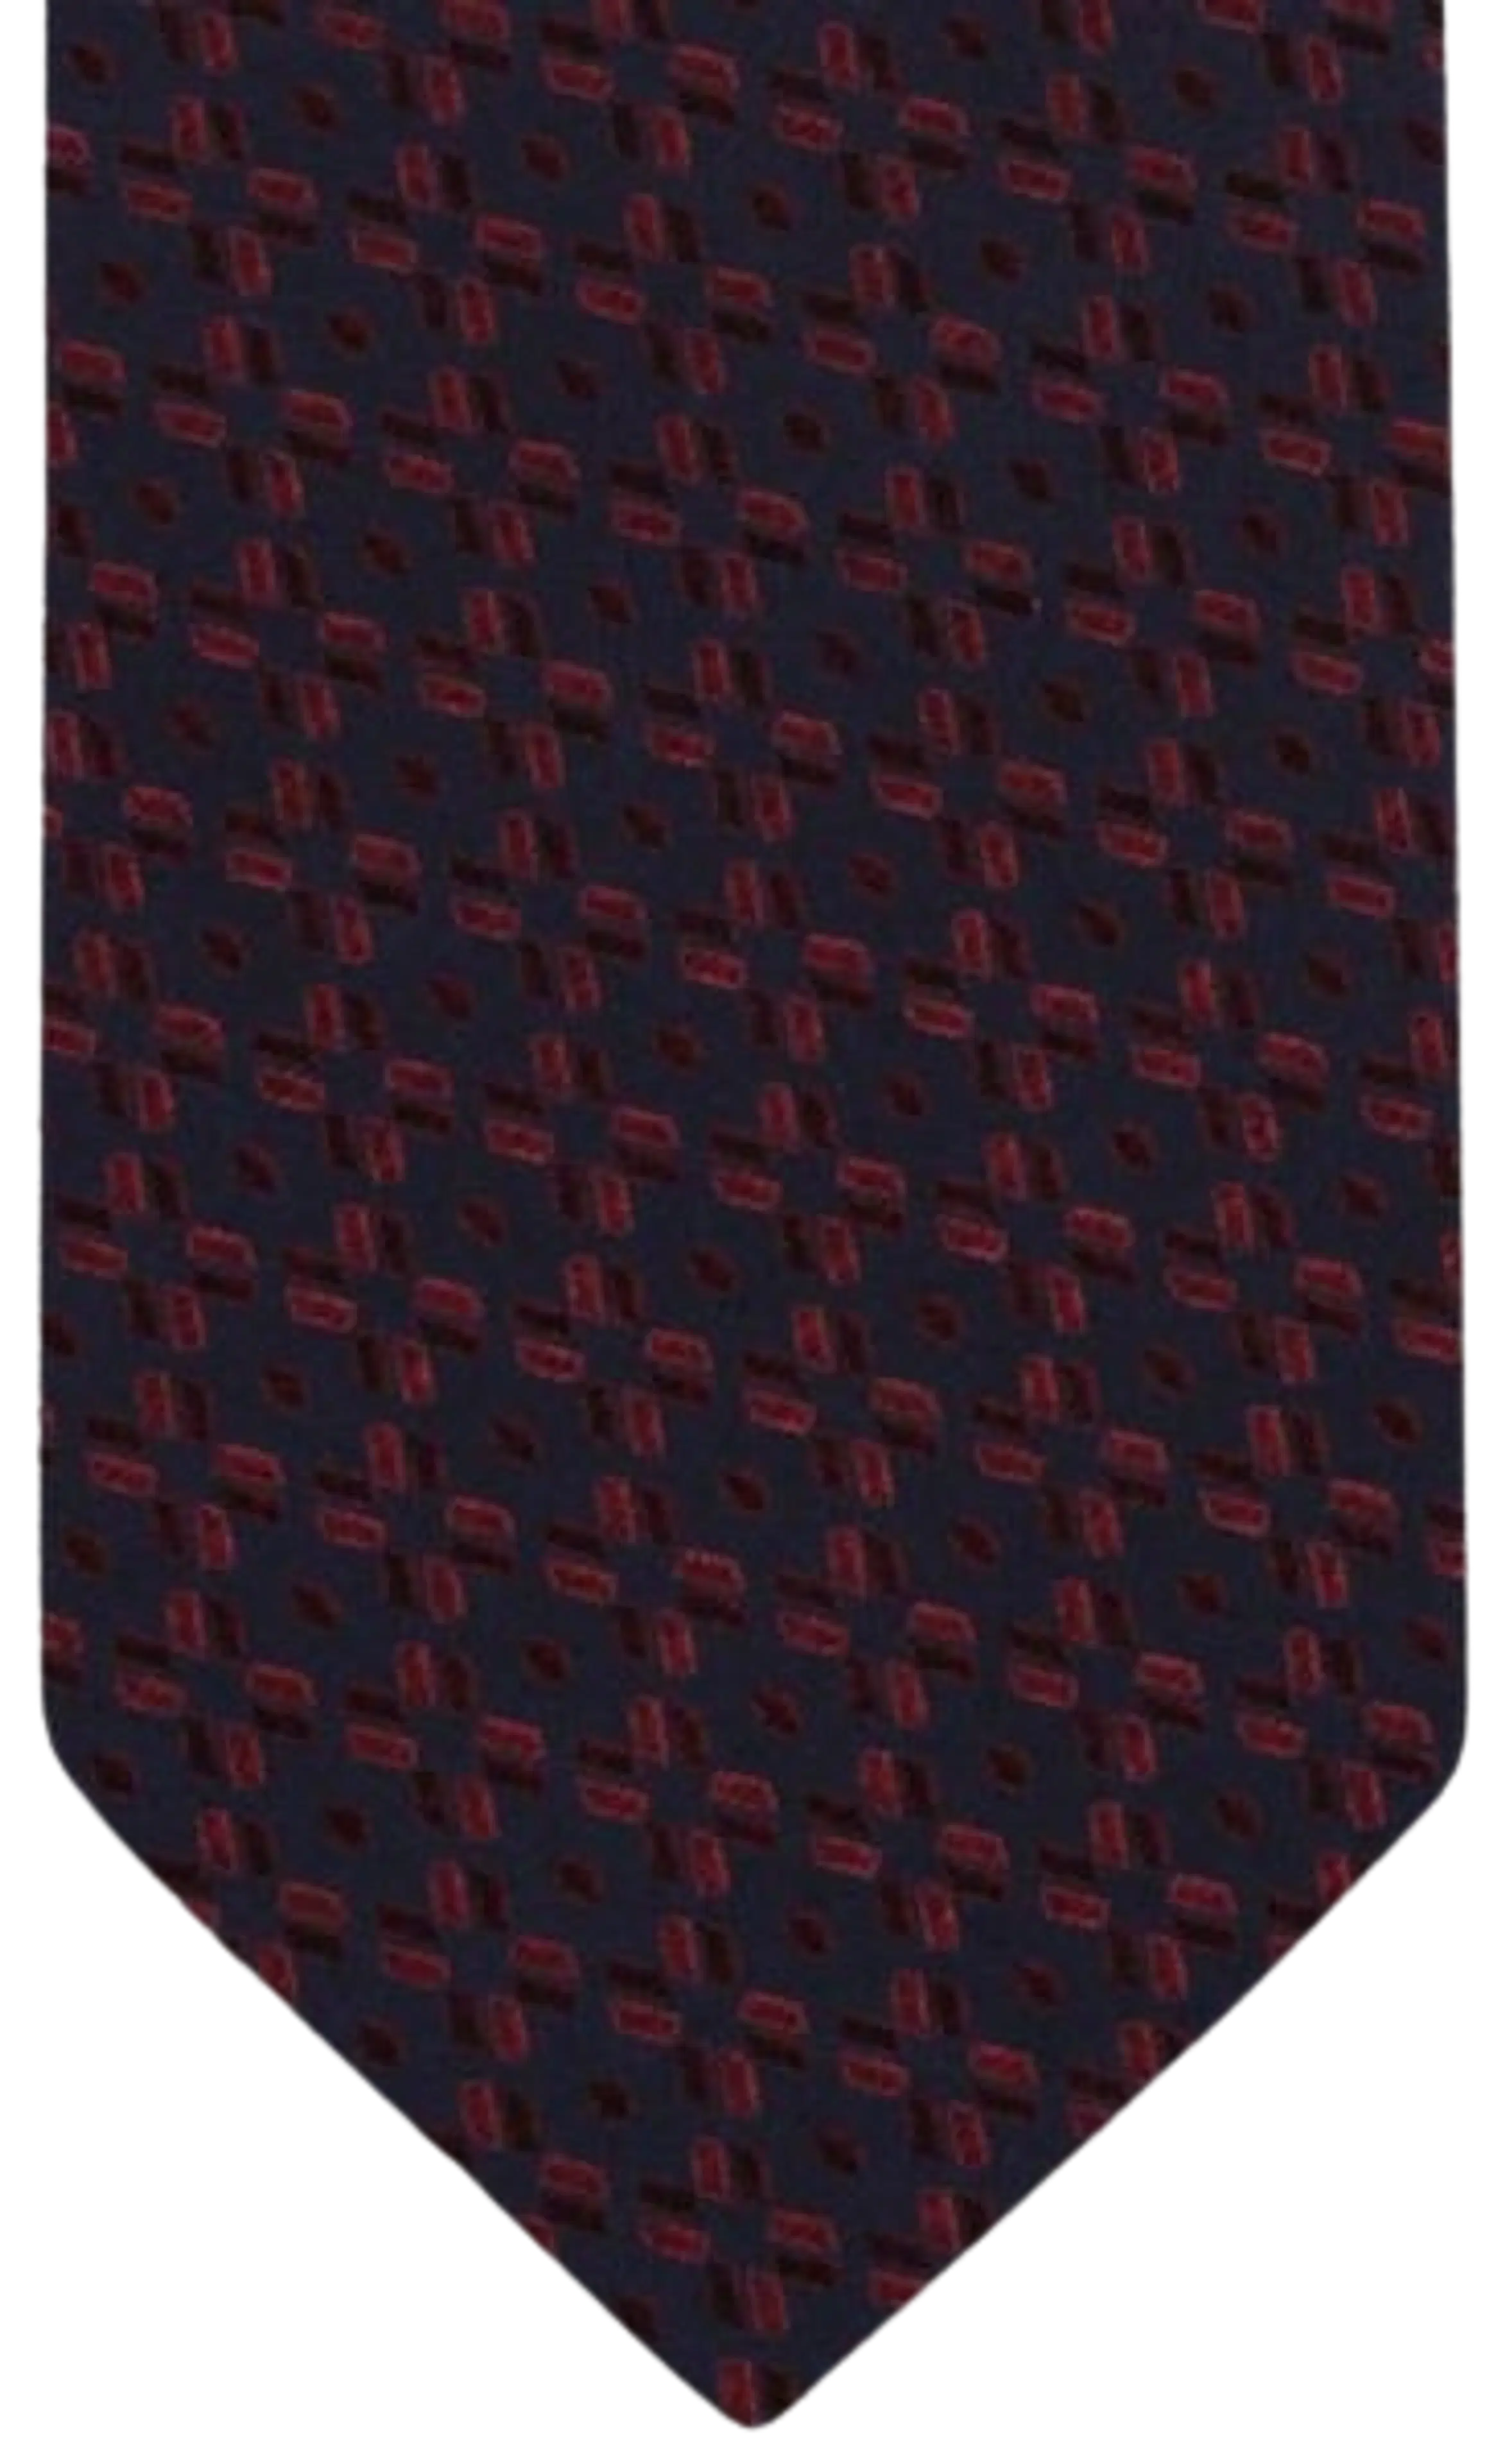 Olymp solmio